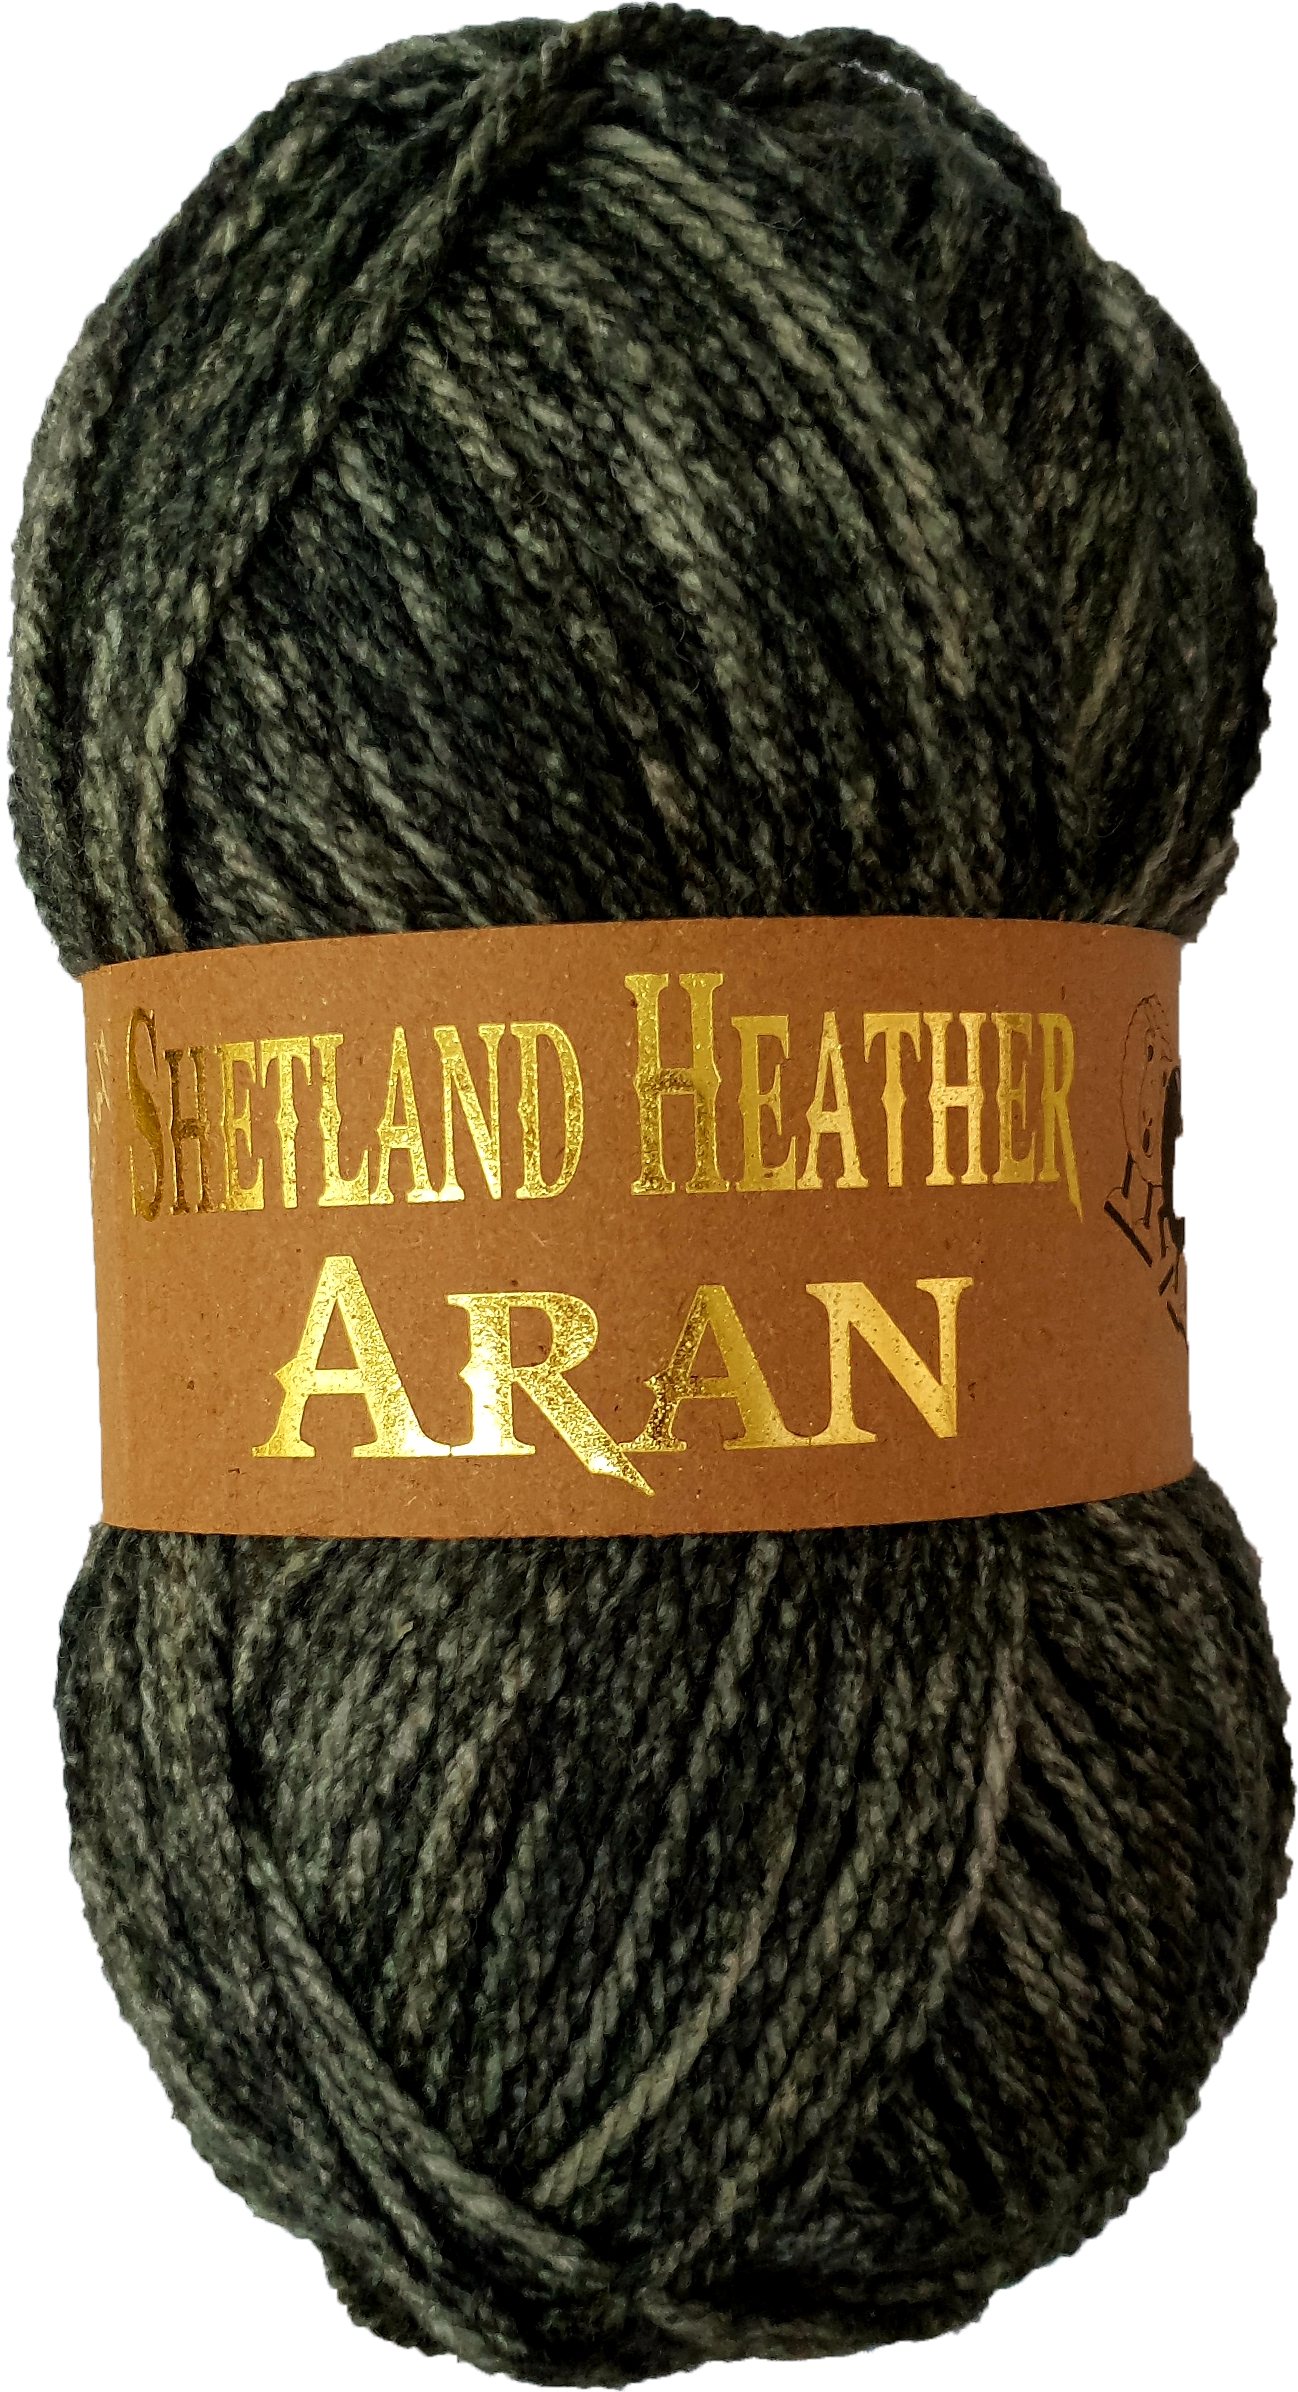 Shetland Heather Aran 10x100g Balls Twilight 011